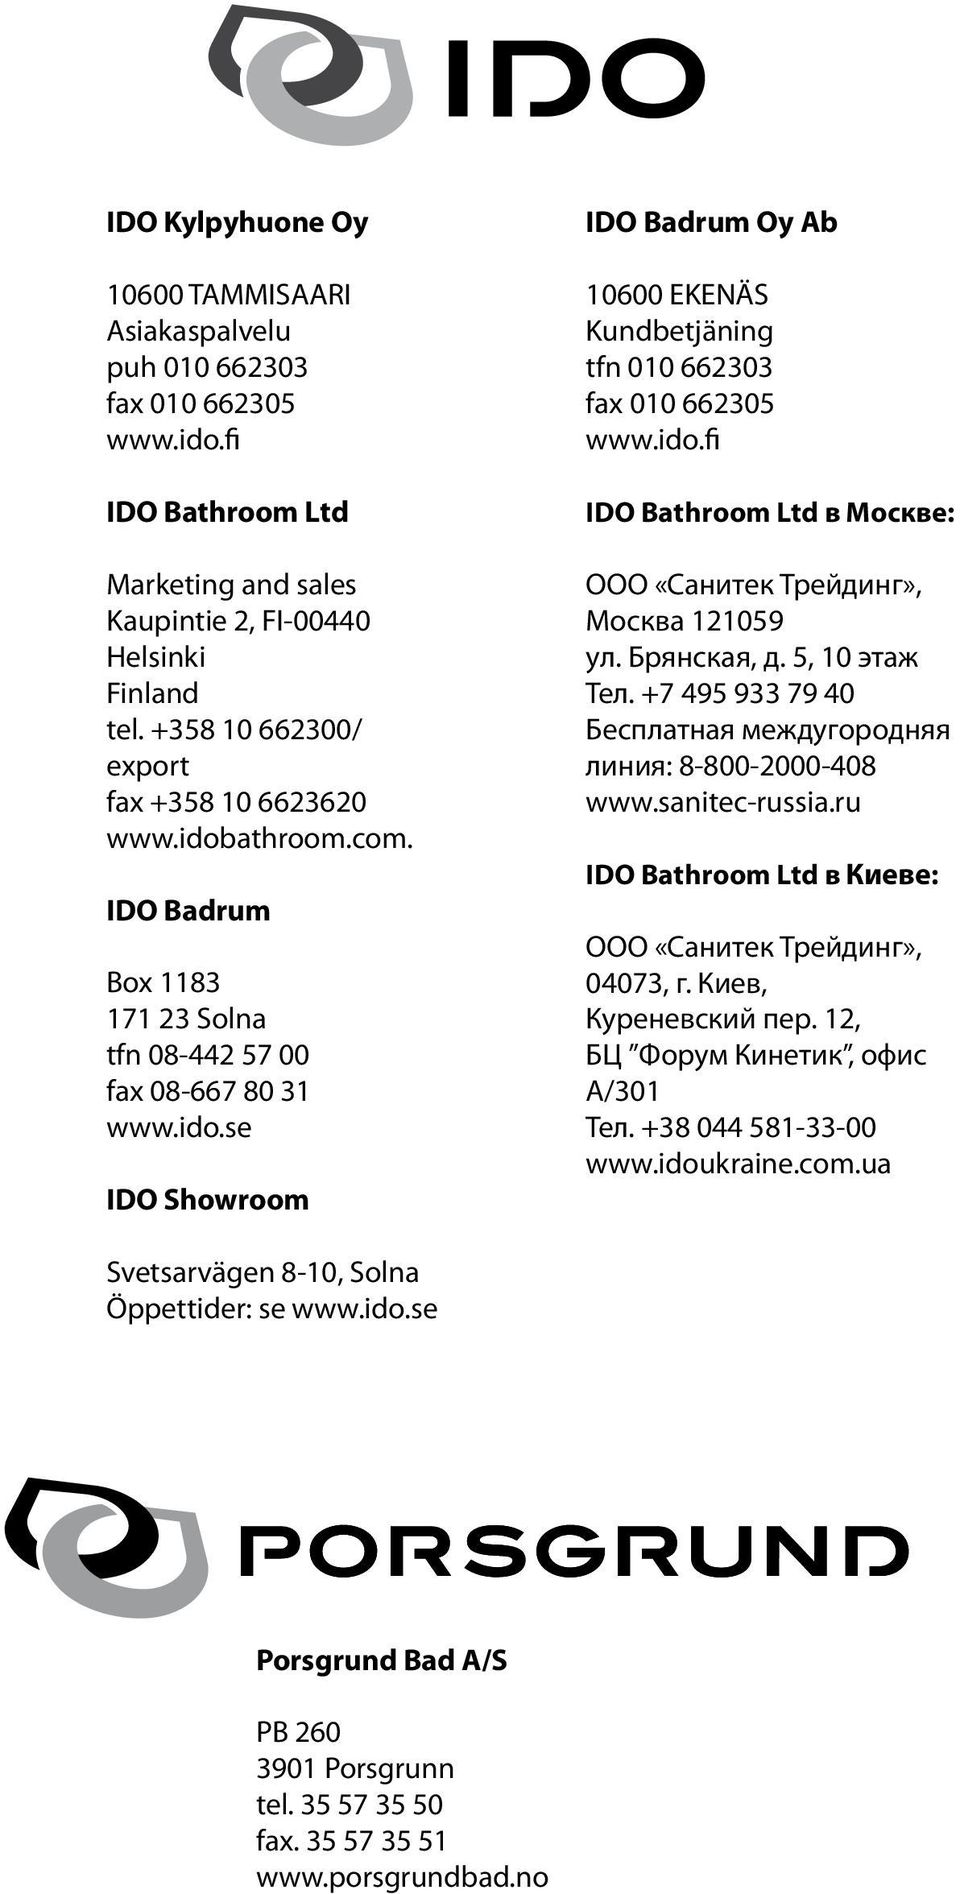 ido.fi IDO Bathroom Ltd в Москве: ООО «Санитек Трейдинг», Москва 121059 ул. Брянская, д. 5, 10 этаж Тел. +7 495 933 79 40 Бесплатная междугородняя линия: 8-800-2000-408 www.sanitec-russia.